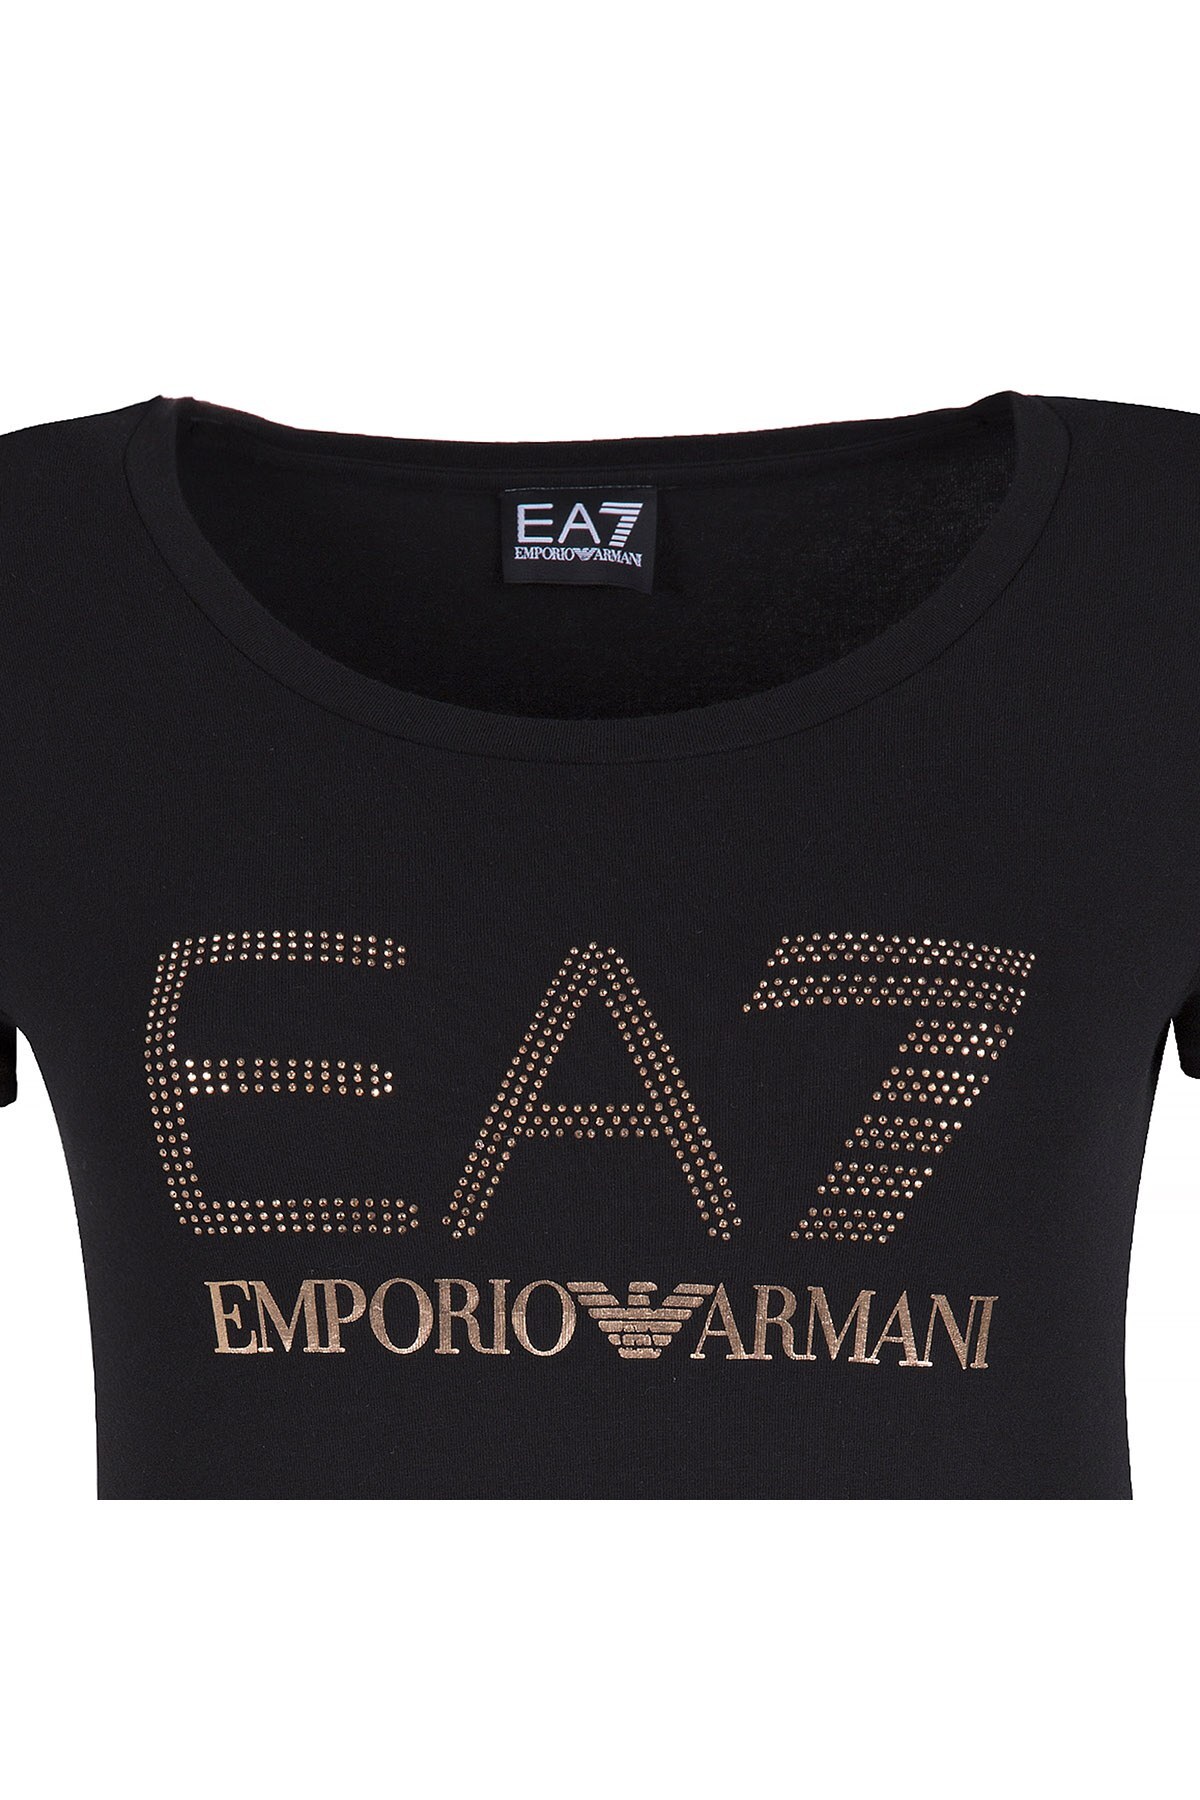 EA7 T SHIRT Kadın T Shirt 6YTT37 TJ12Z 1200 SİYAH